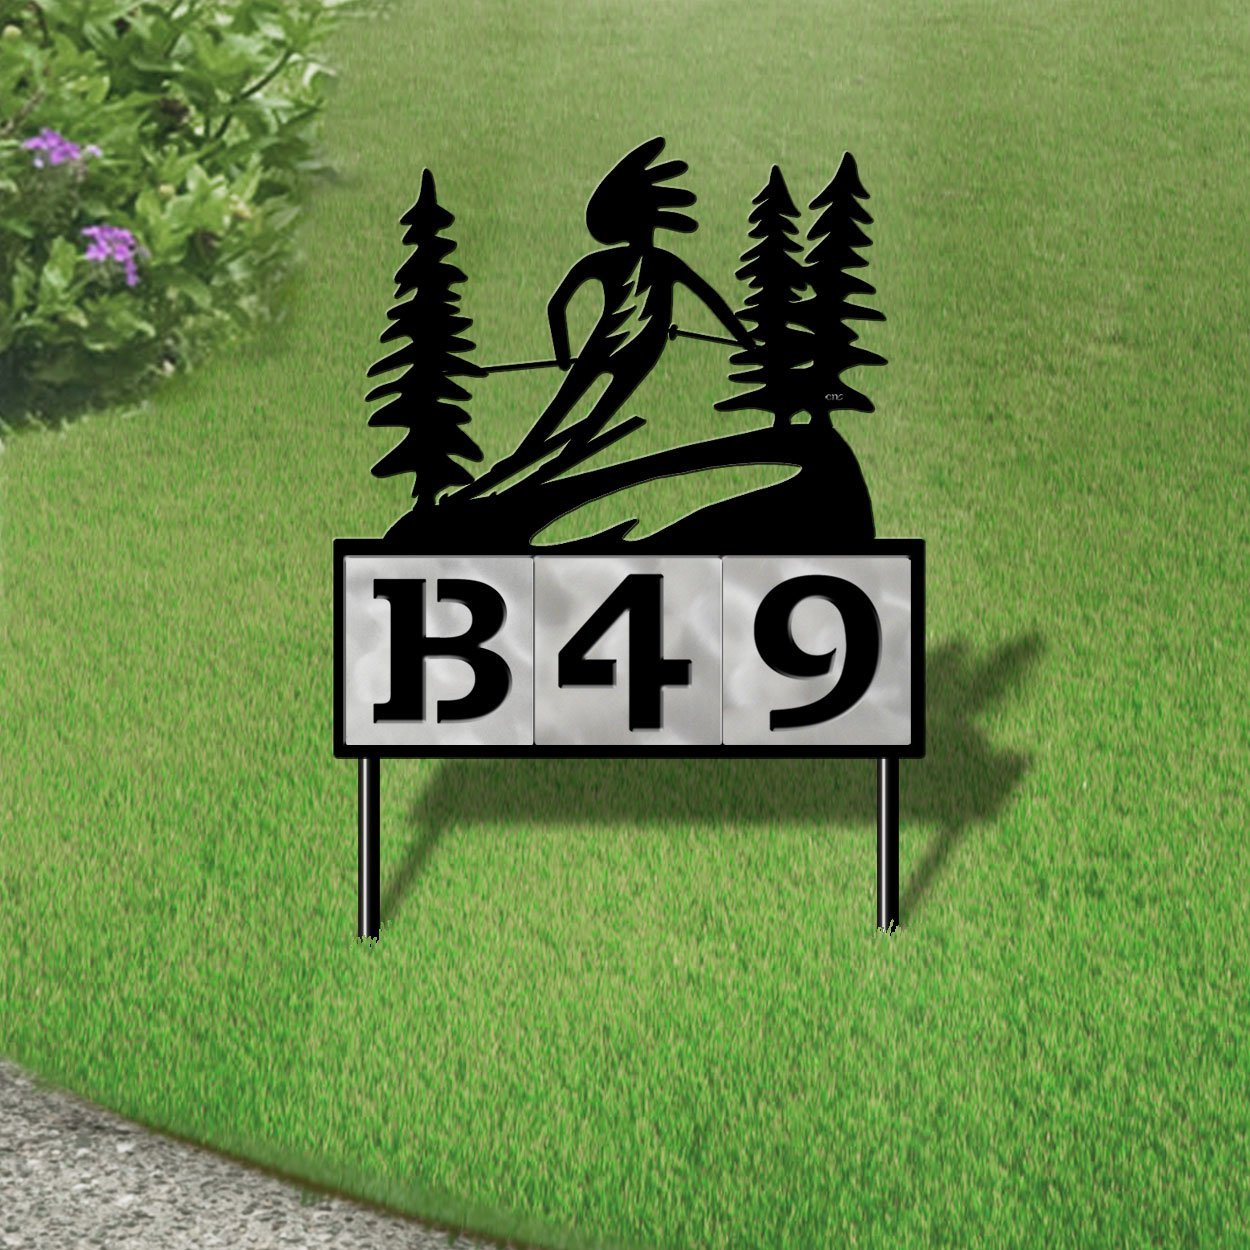 610163 - Kokopelli Alpine Skier Design 3-Digit Horizontal 6-inch Tile Outdoor House Numbers Yard Sign